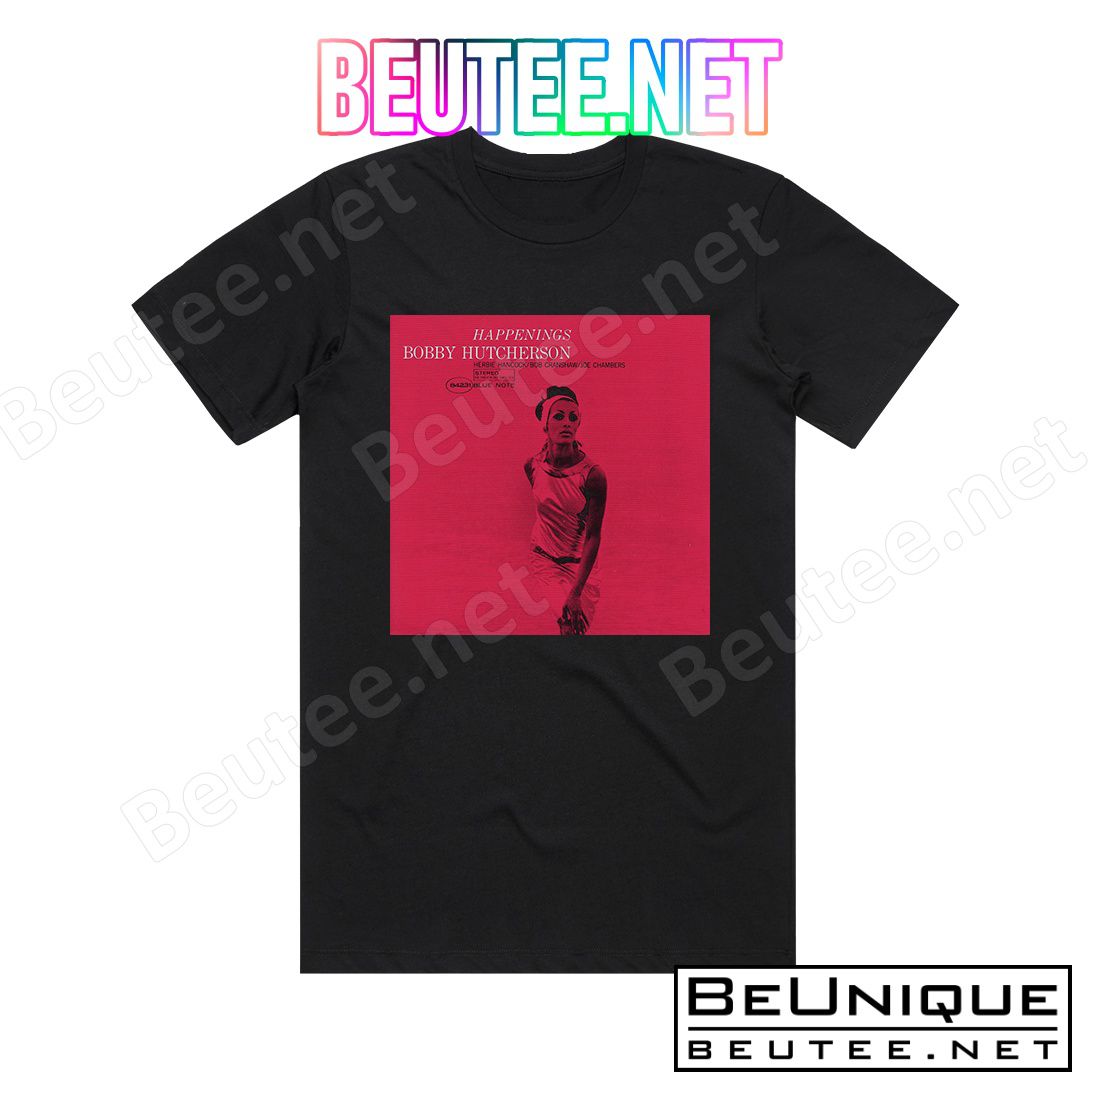 Bobby Hutcherson Happenings Album Cover T-Shirt